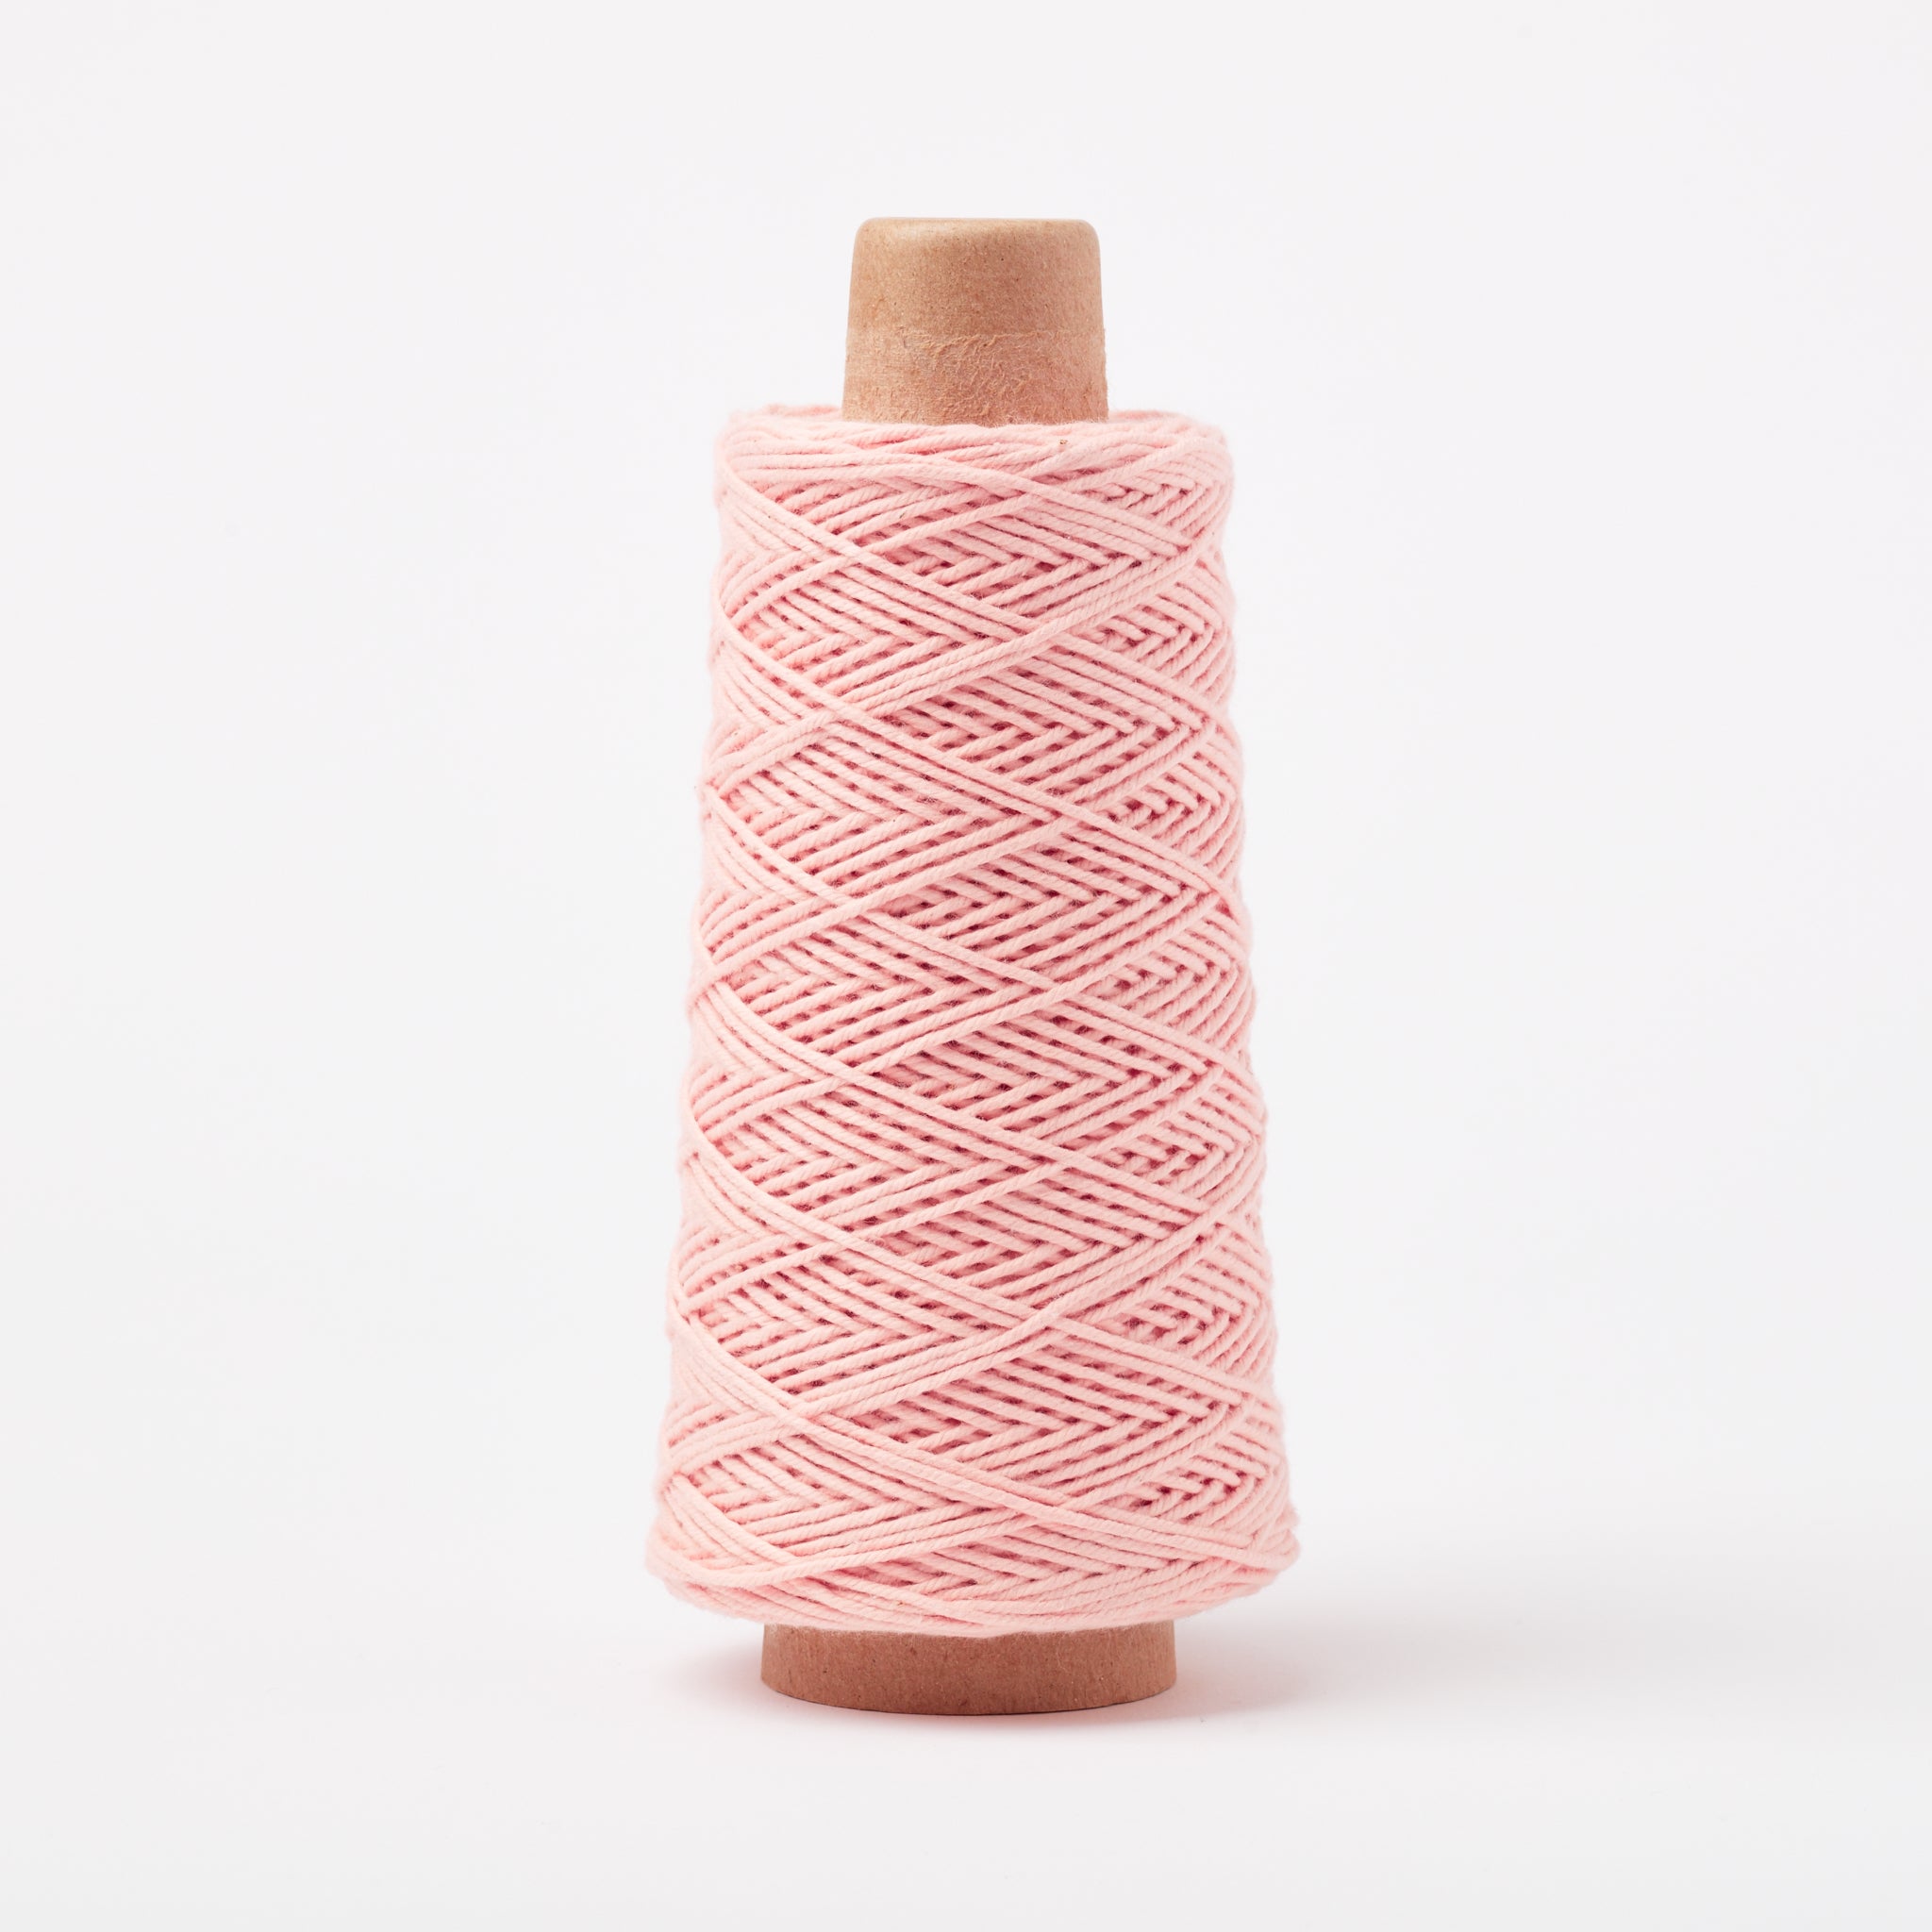 Crocheting with Gist Weaving Yarn - Gist Yarn